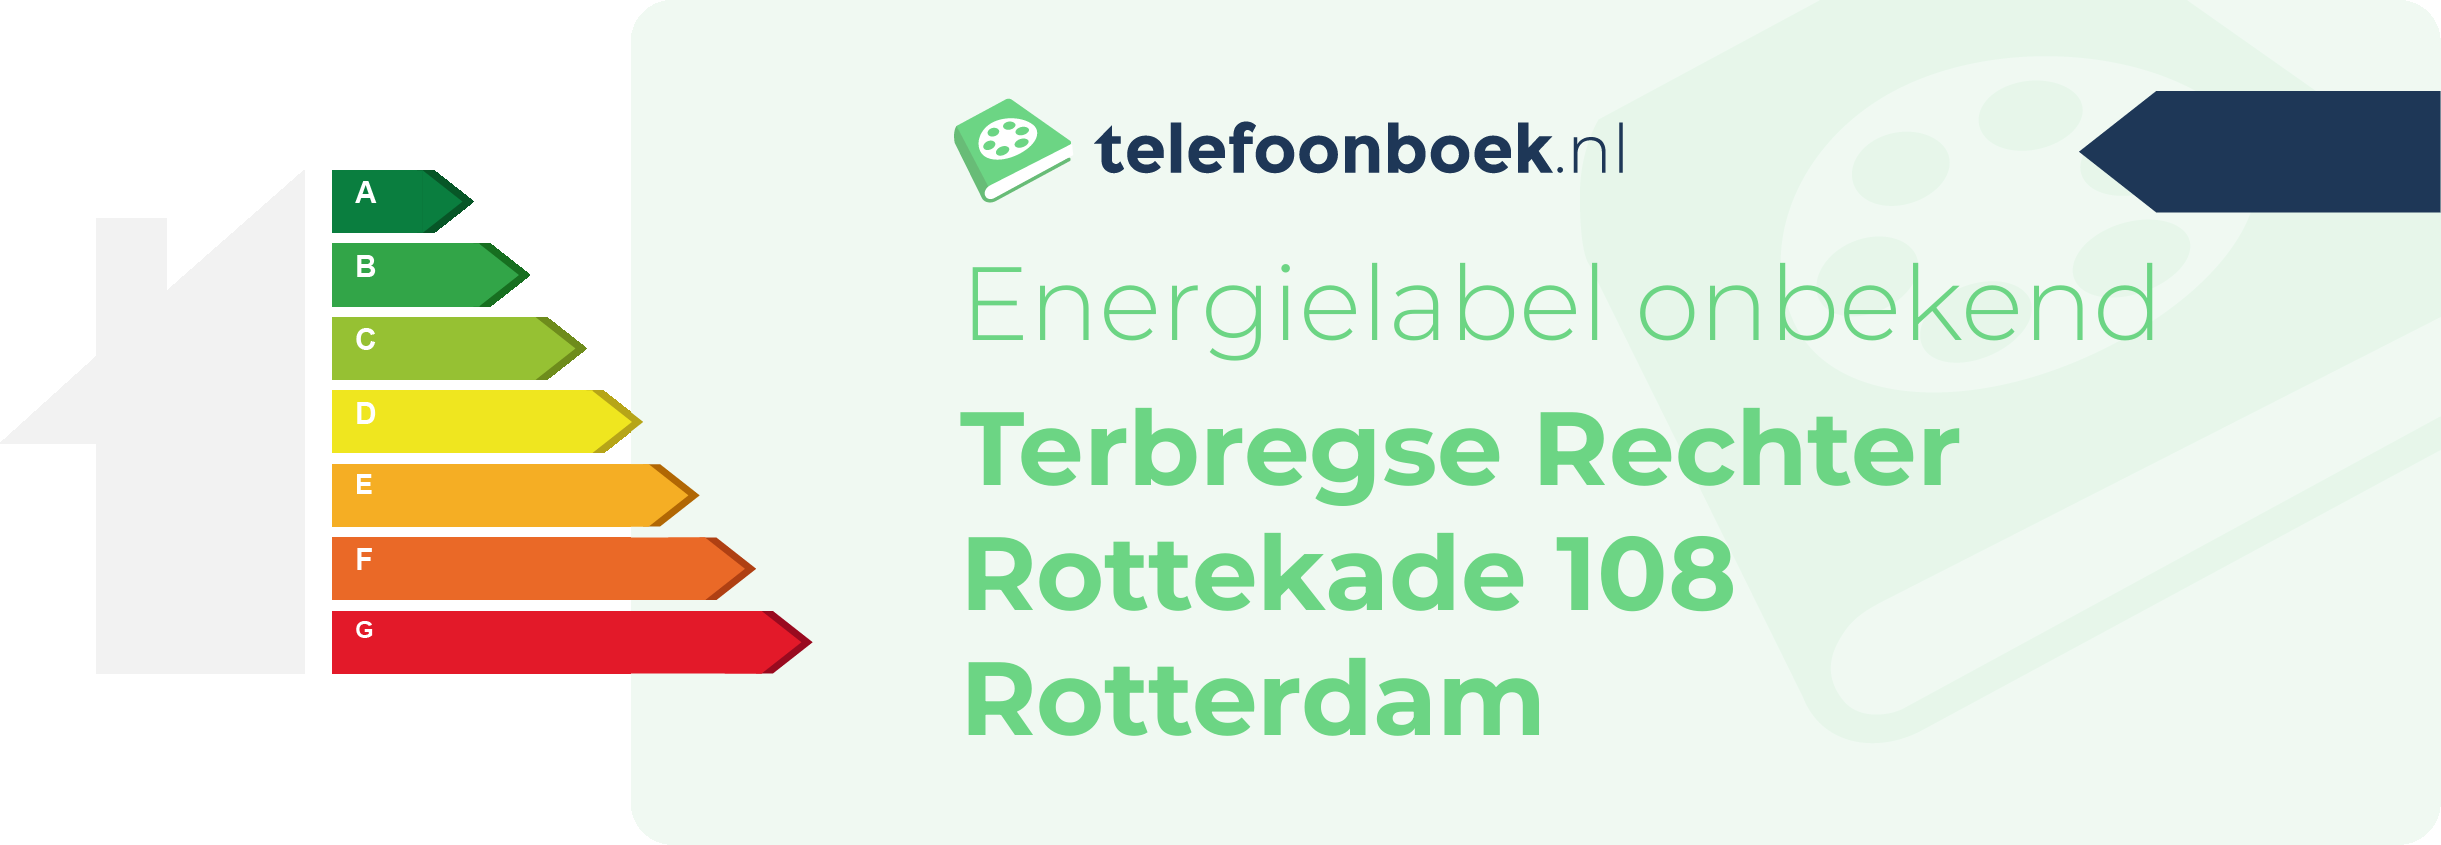 Energielabel Terbregse Rechter Rottekade 108 Rotterdam